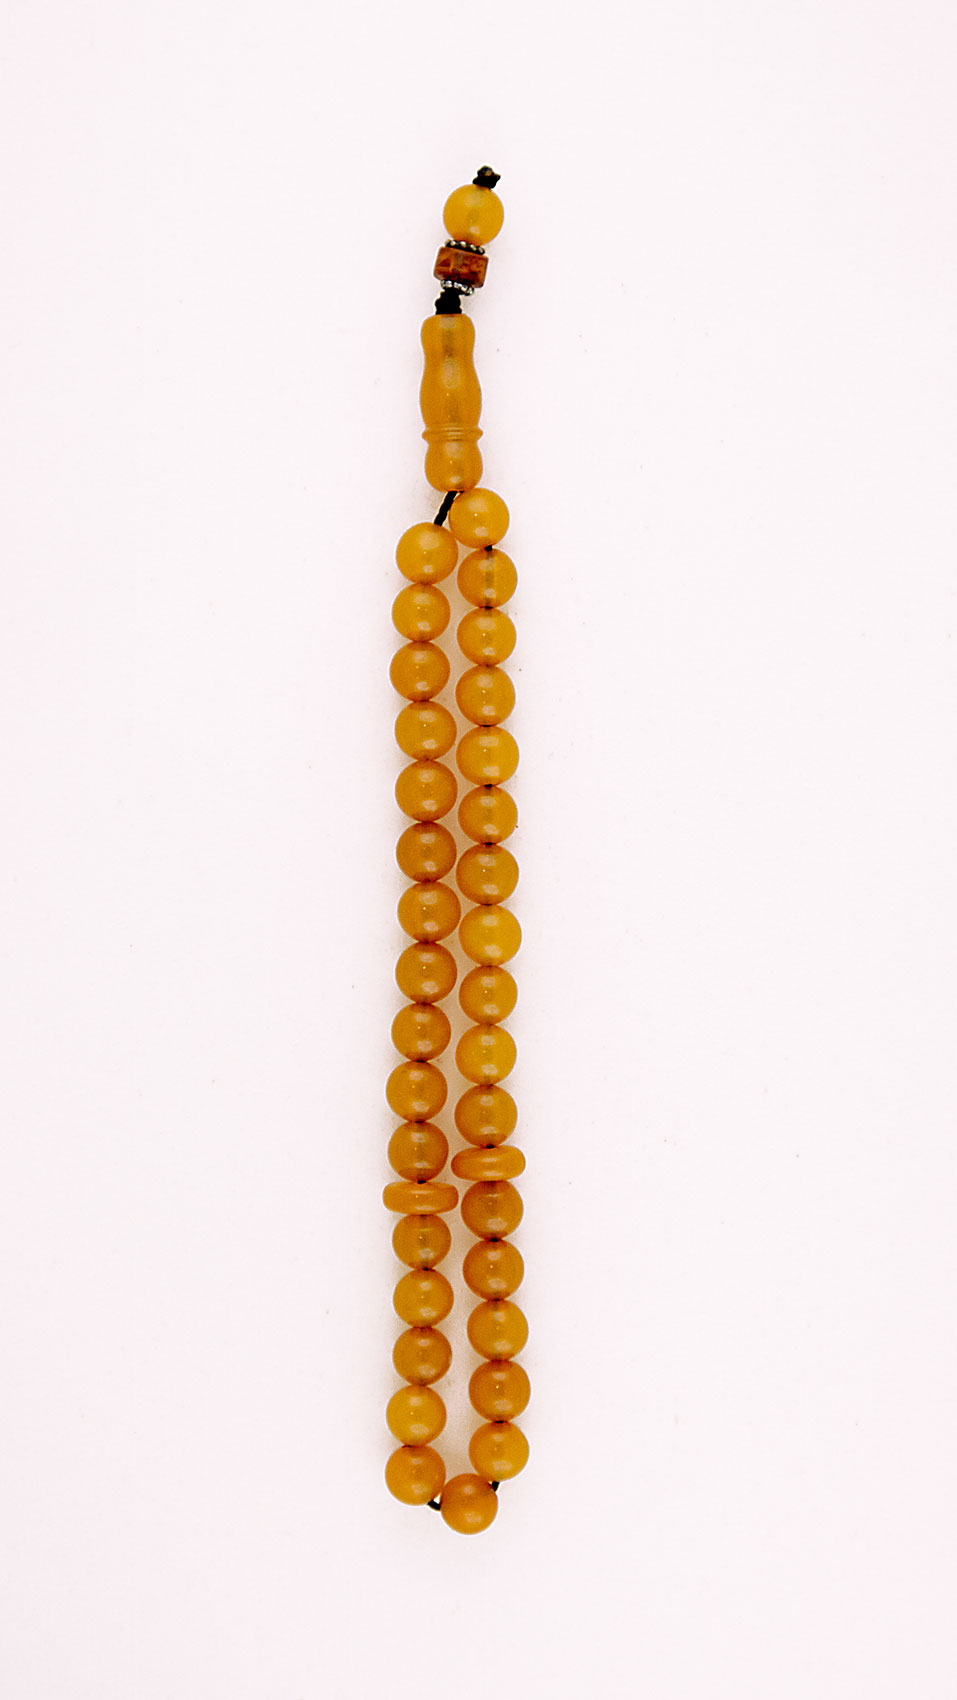 Muslim Prayer beads made of genuine amber from Baltic sea 